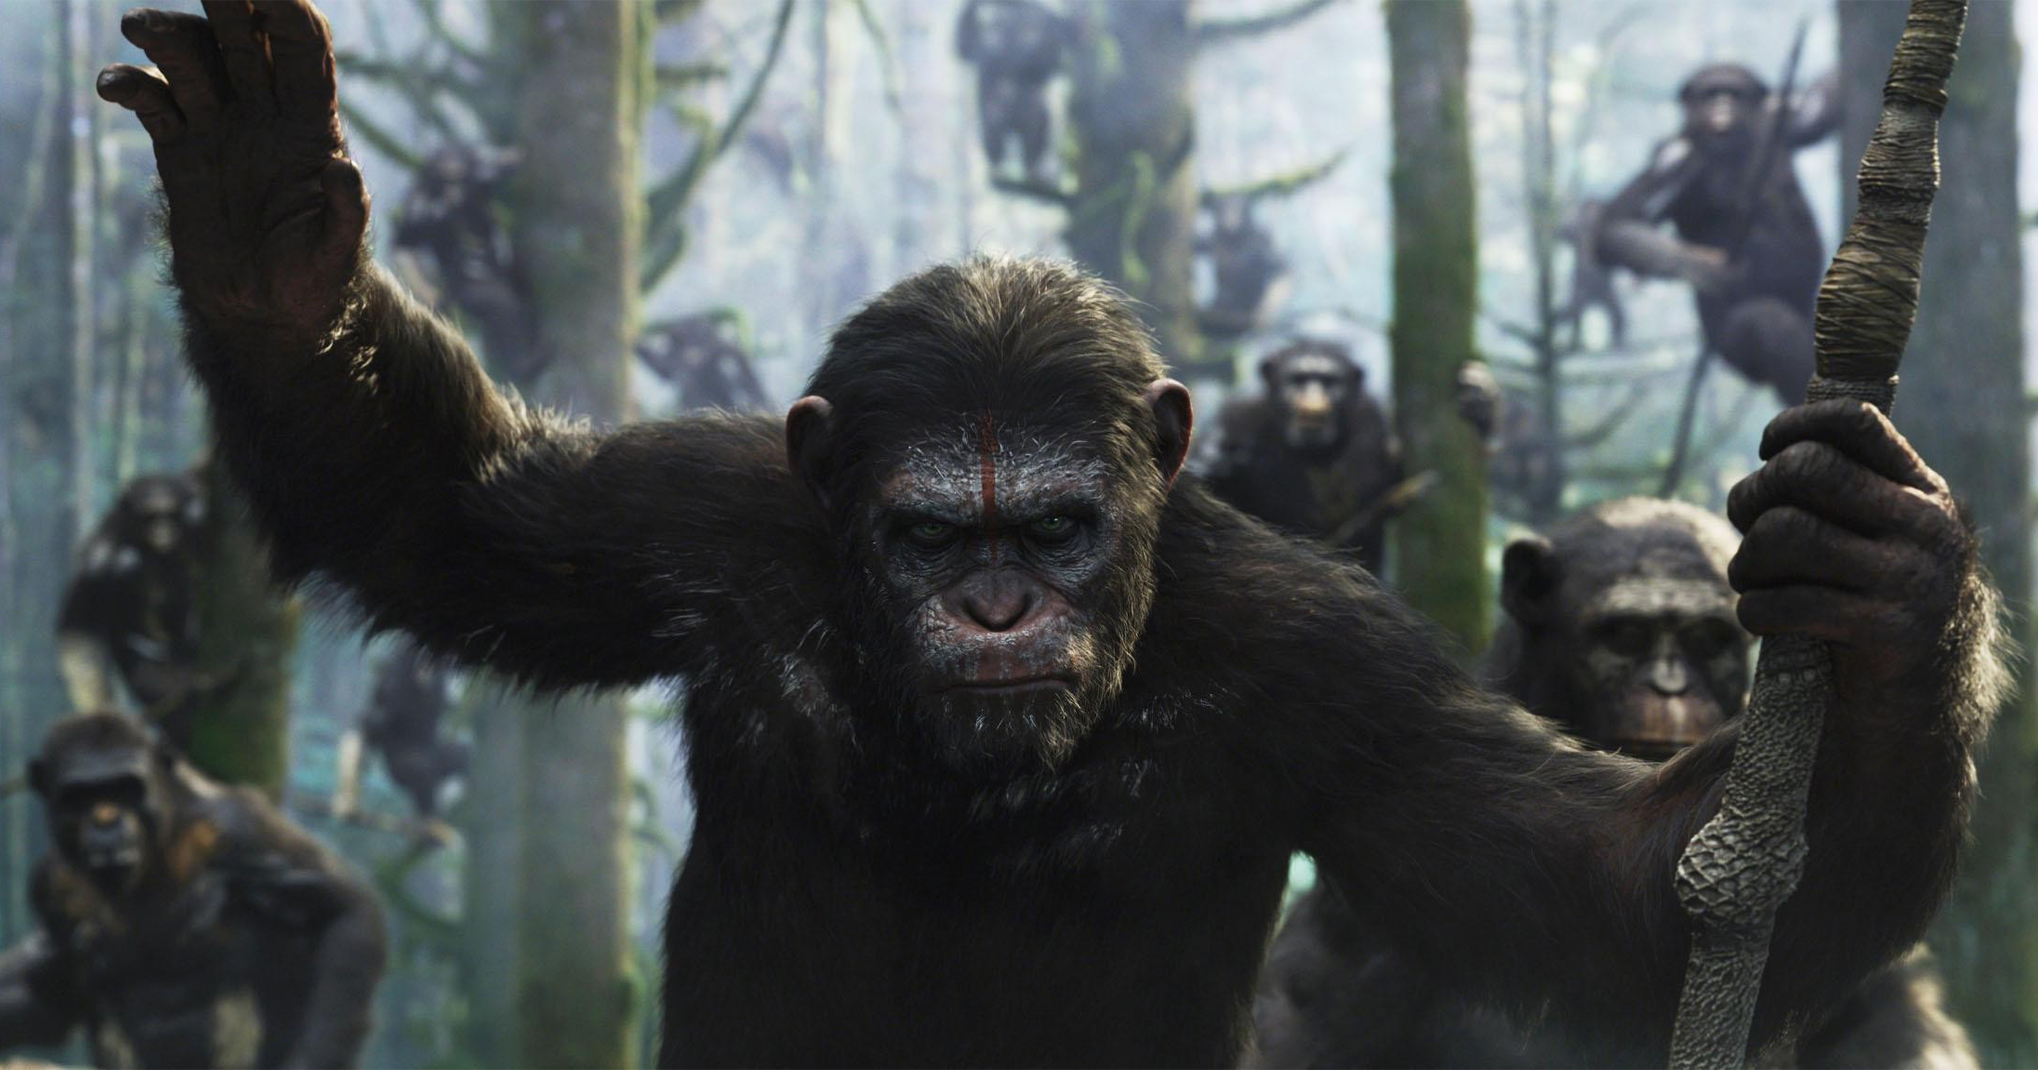 Planet Of The Apes 猿の惑星 シリーズを ディズニー傘下の Fox で復活させる新監督が決定 Cia Movie News